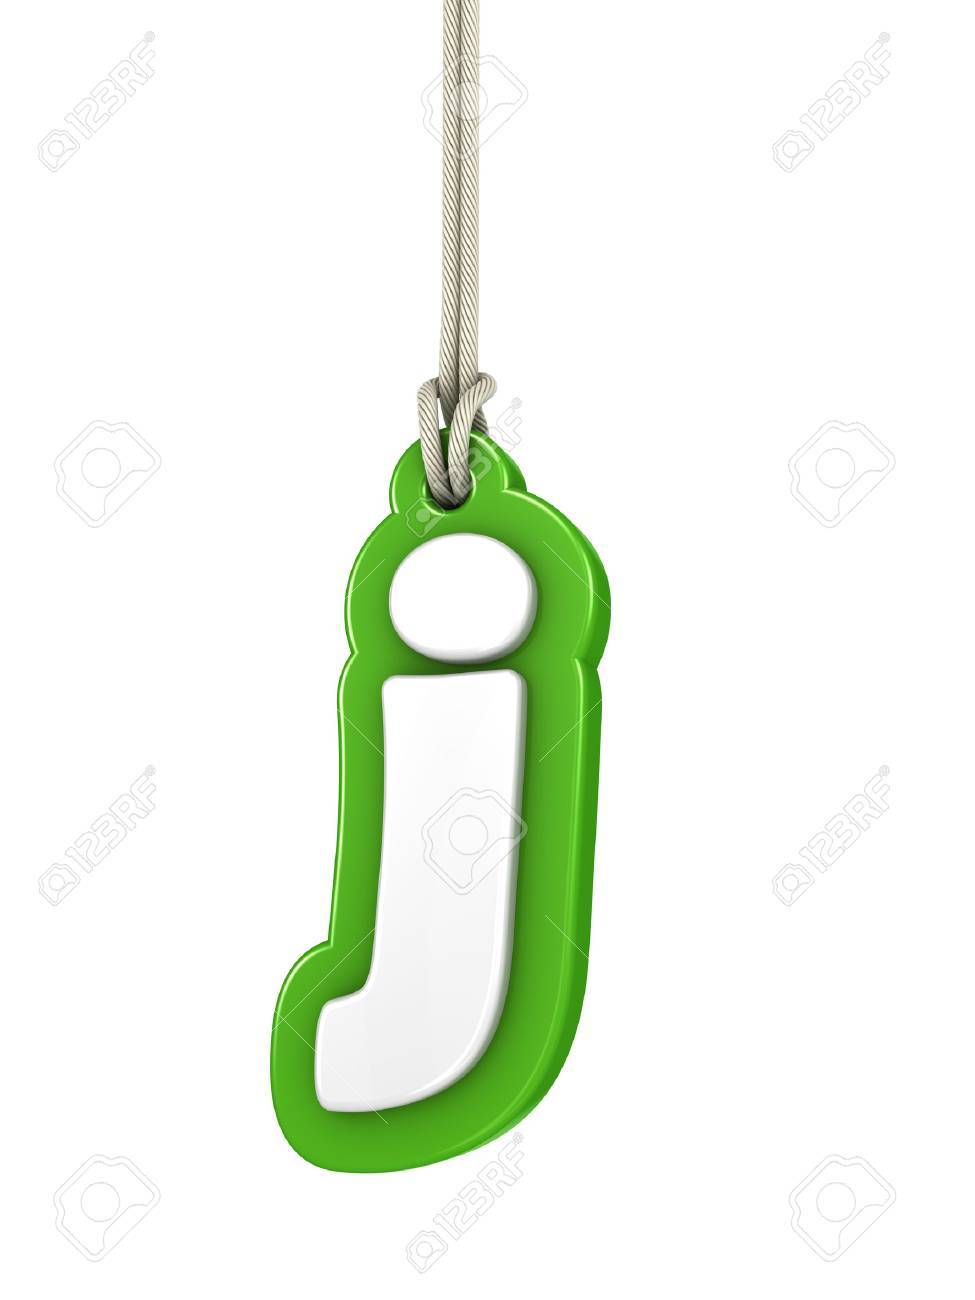 Green lowercase letter j hanging